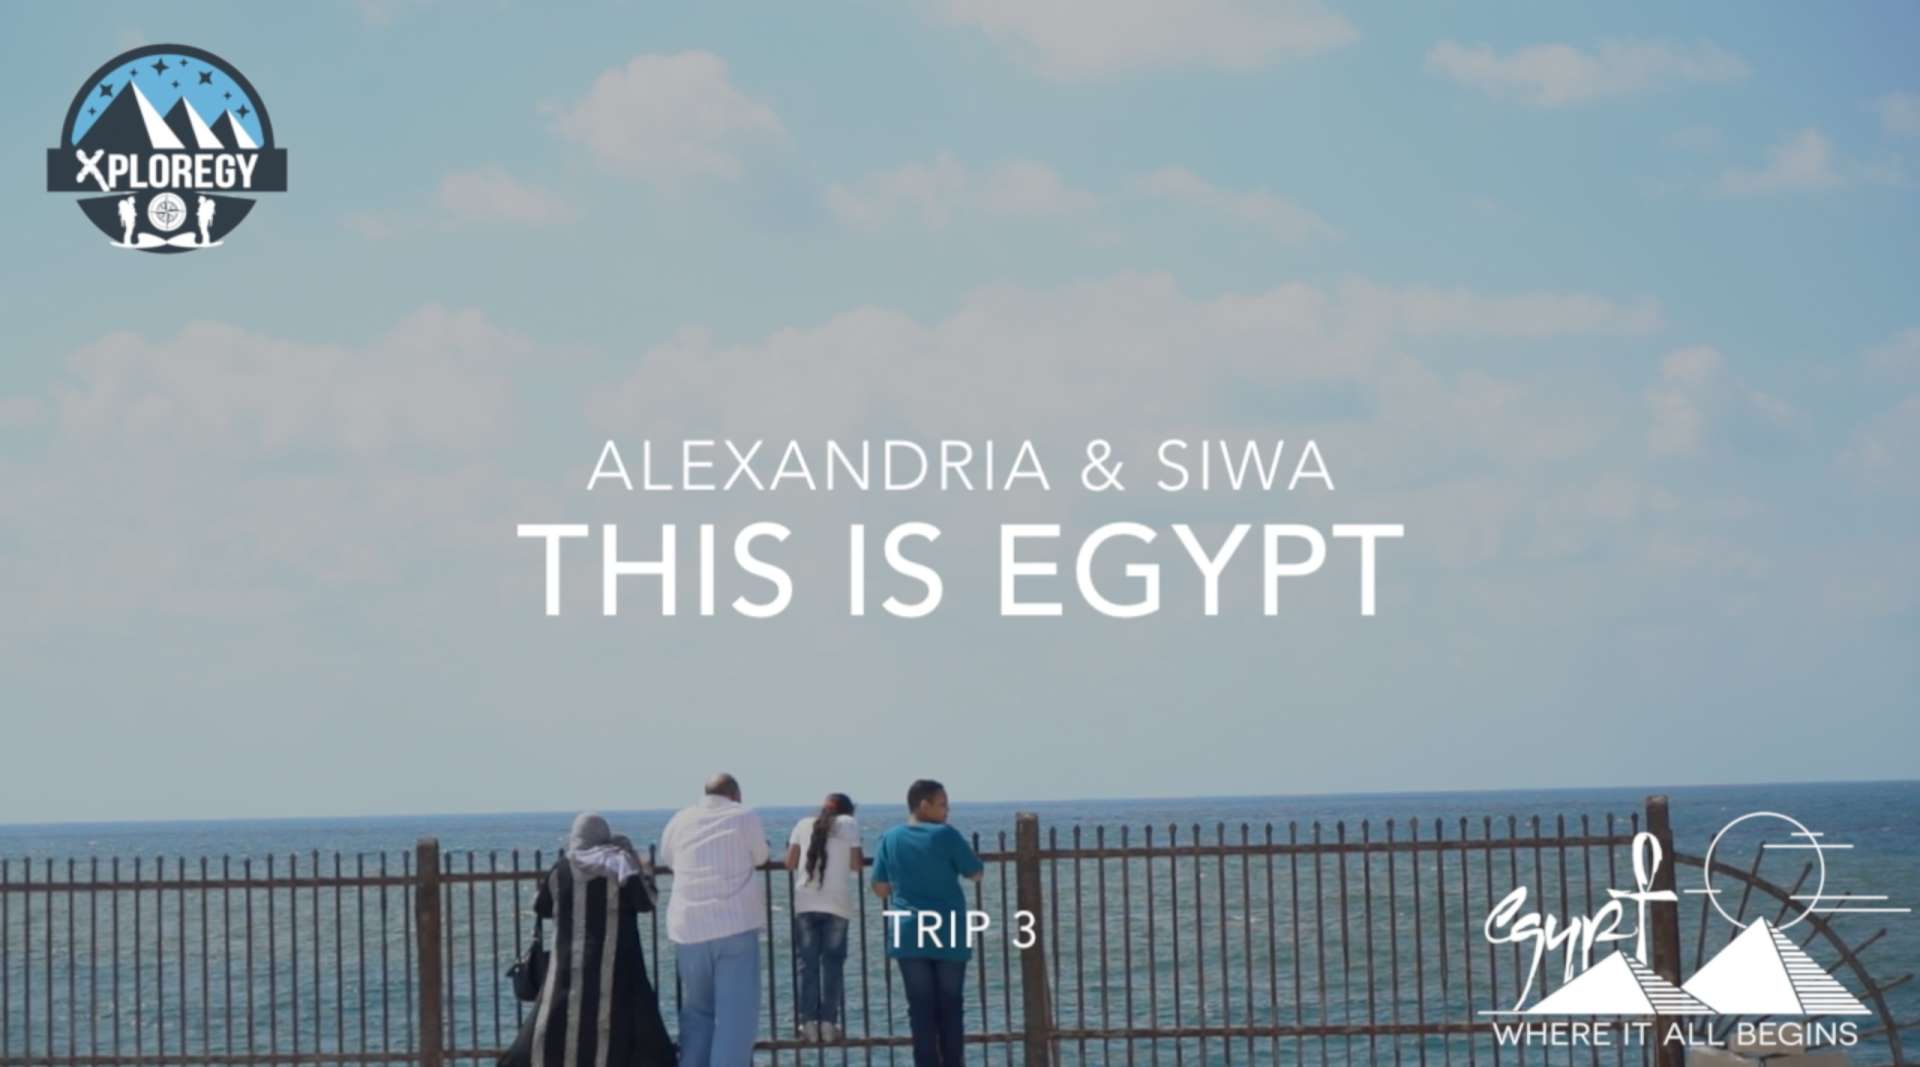 AIESEC埃及宣传片-亚历山大港&沙漠绿洲锡瓦